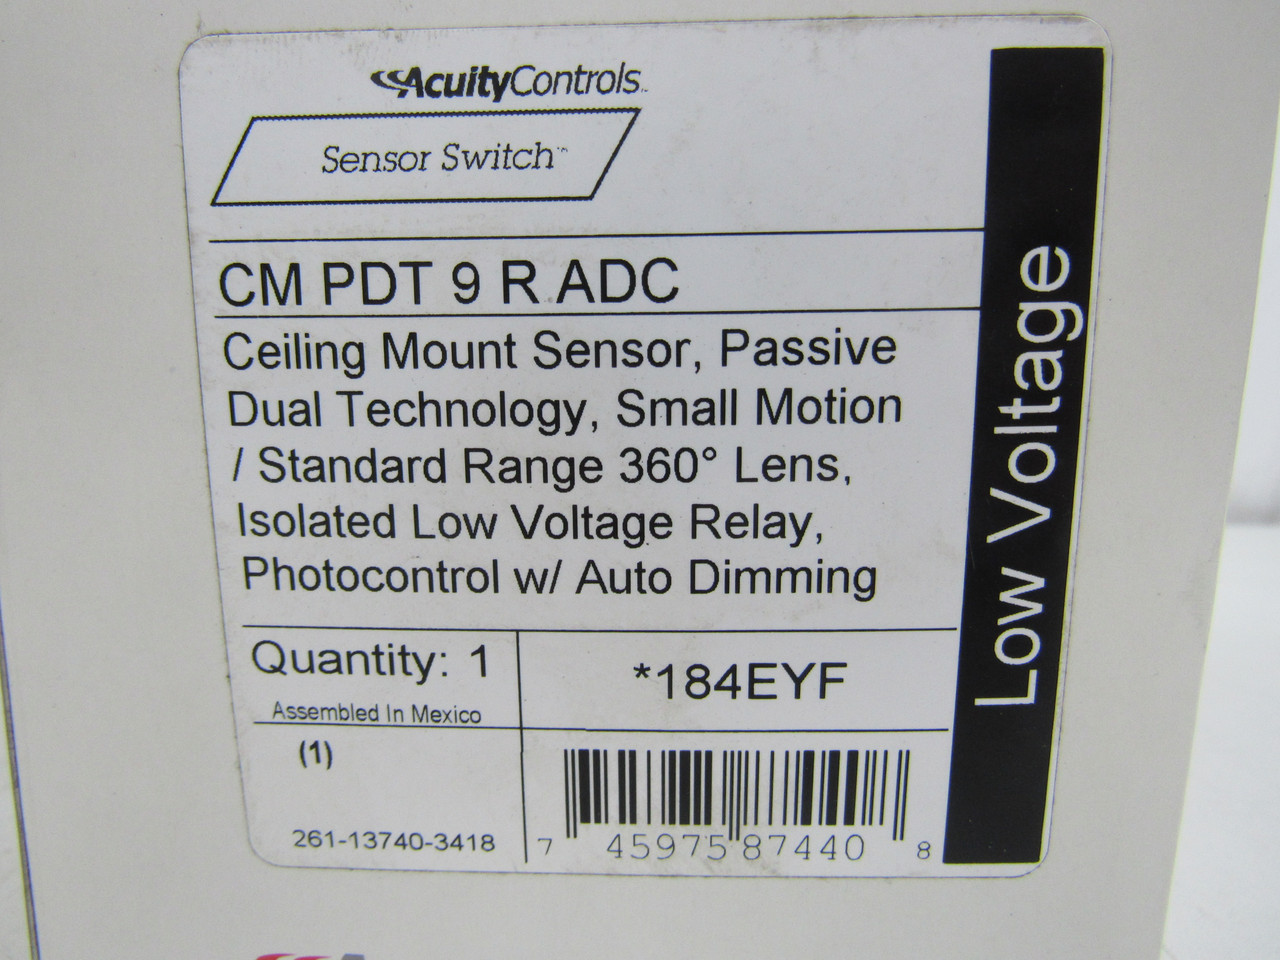 Occupancy Sensor, Ceiling Mount by Sensor Switch cm PDT 10